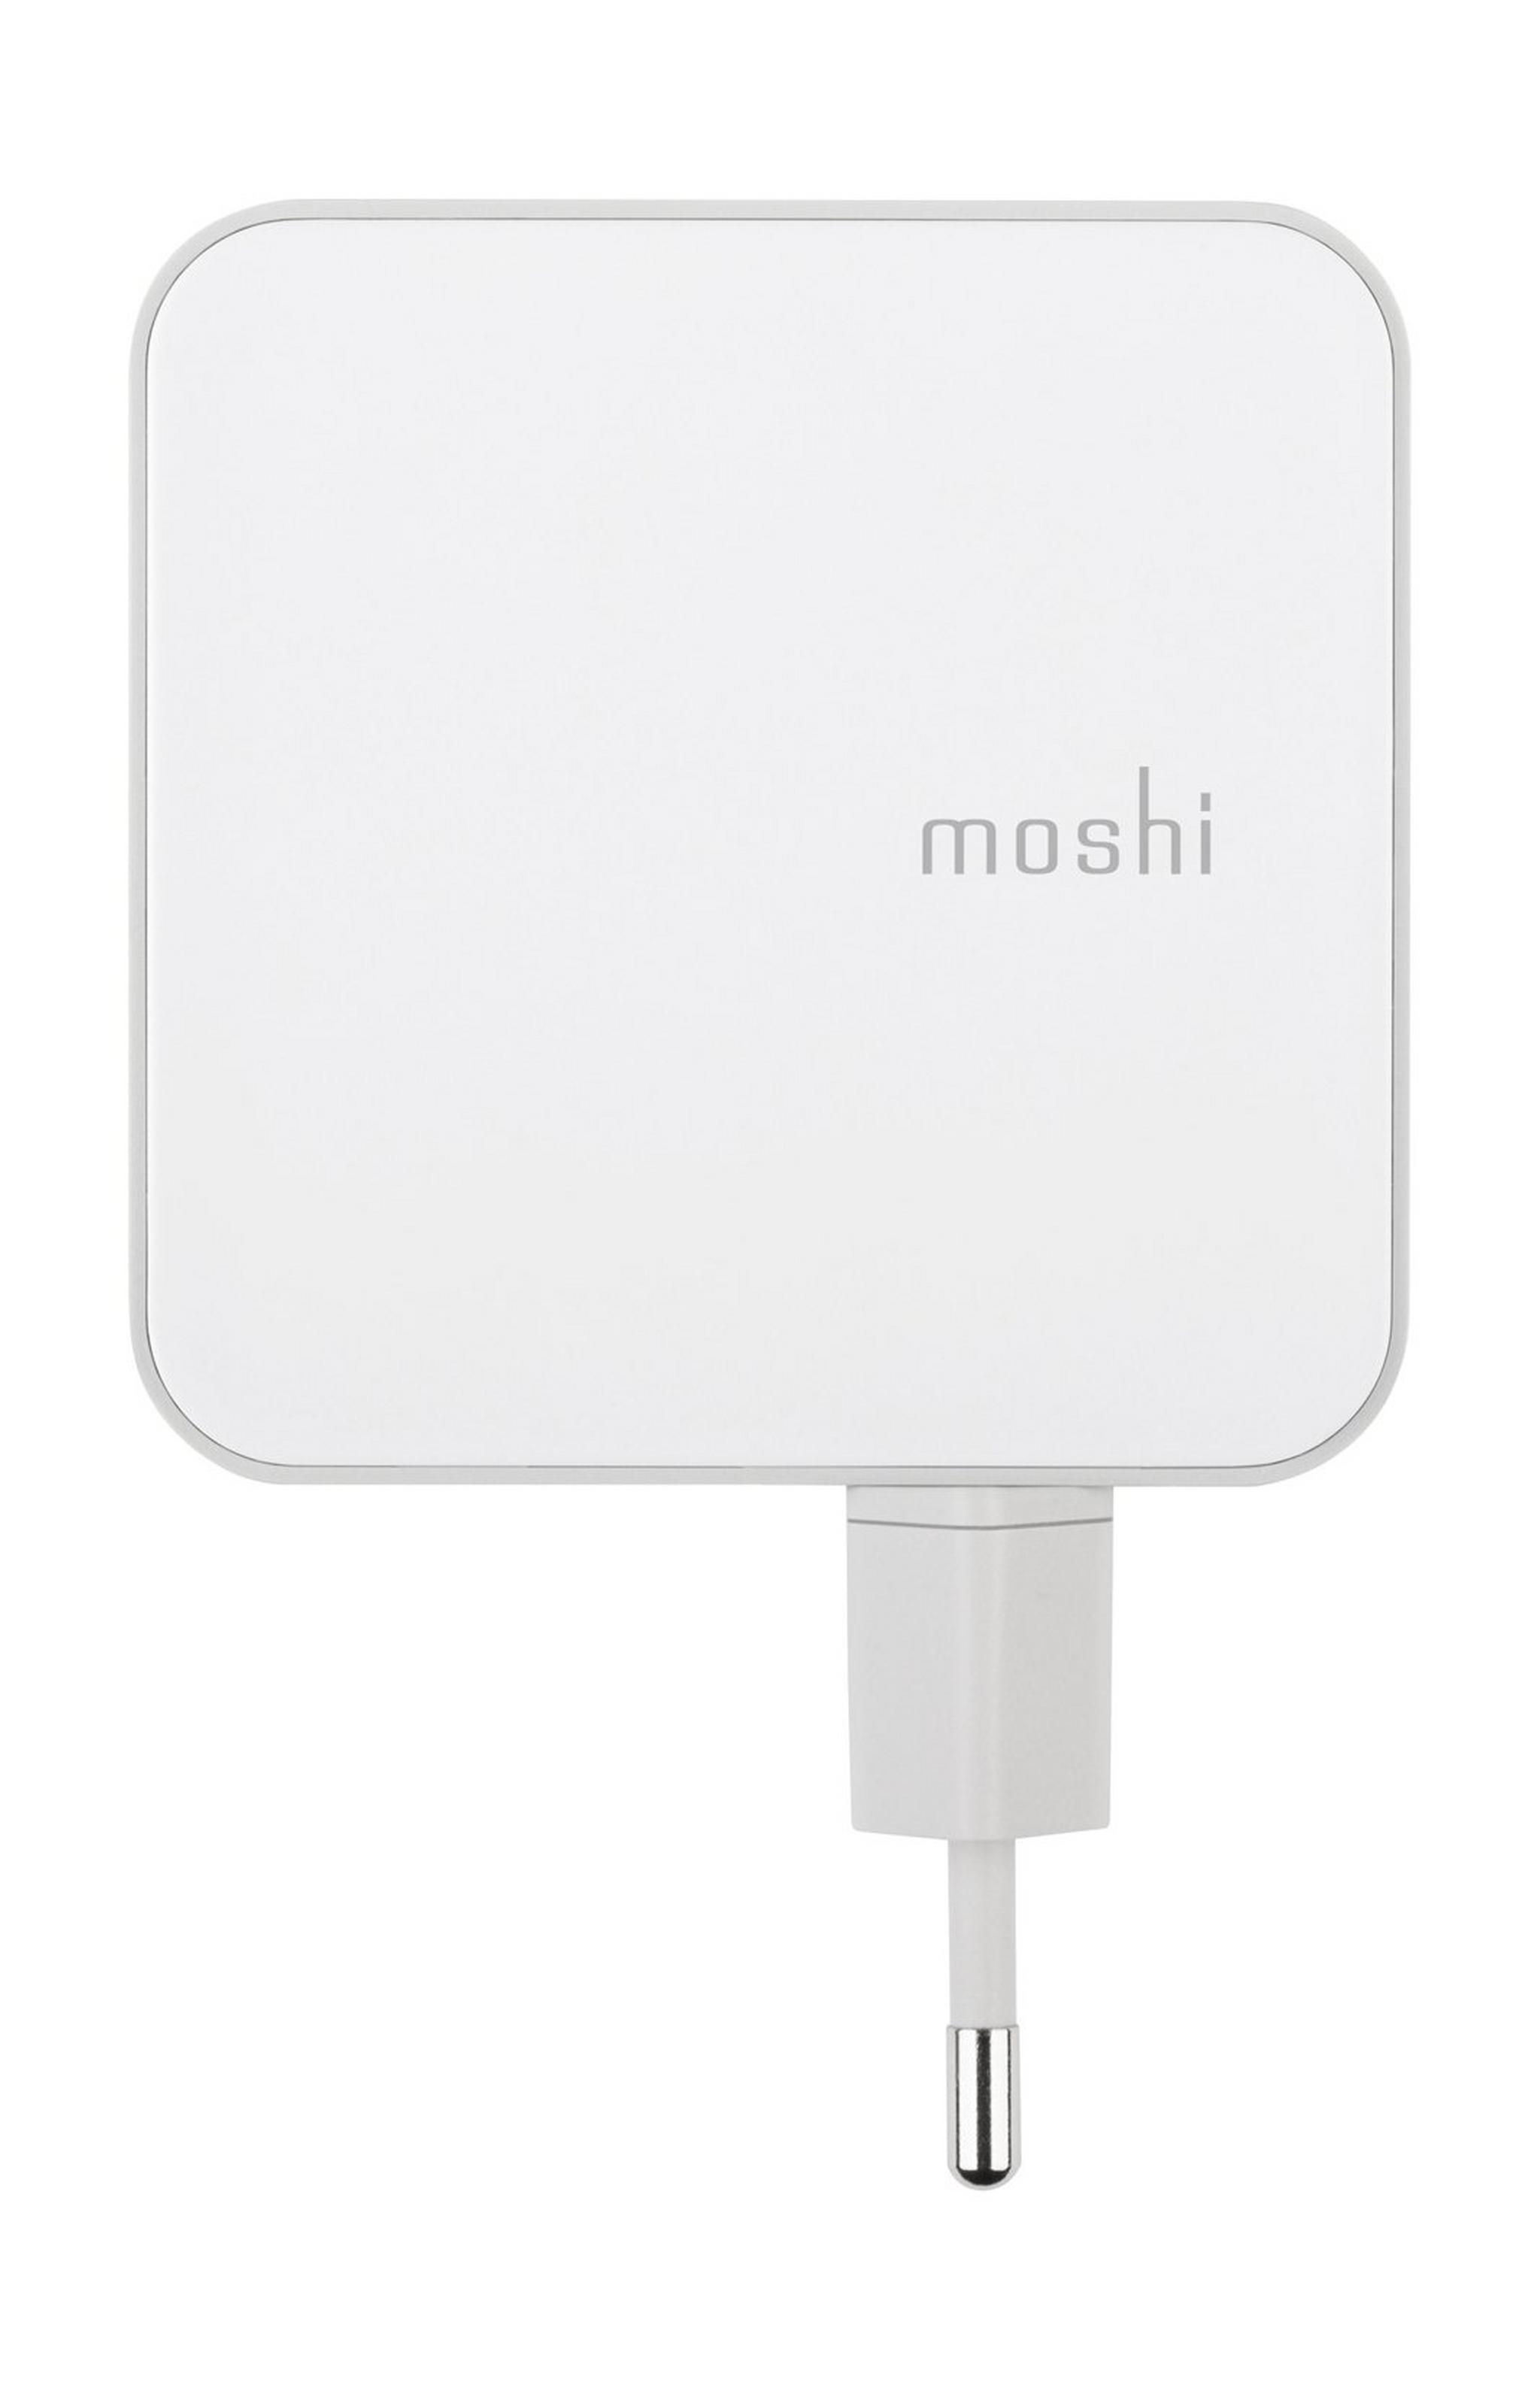 Moshi ProGeo 35 W 4-Port USB Wall Charger EU Version - White